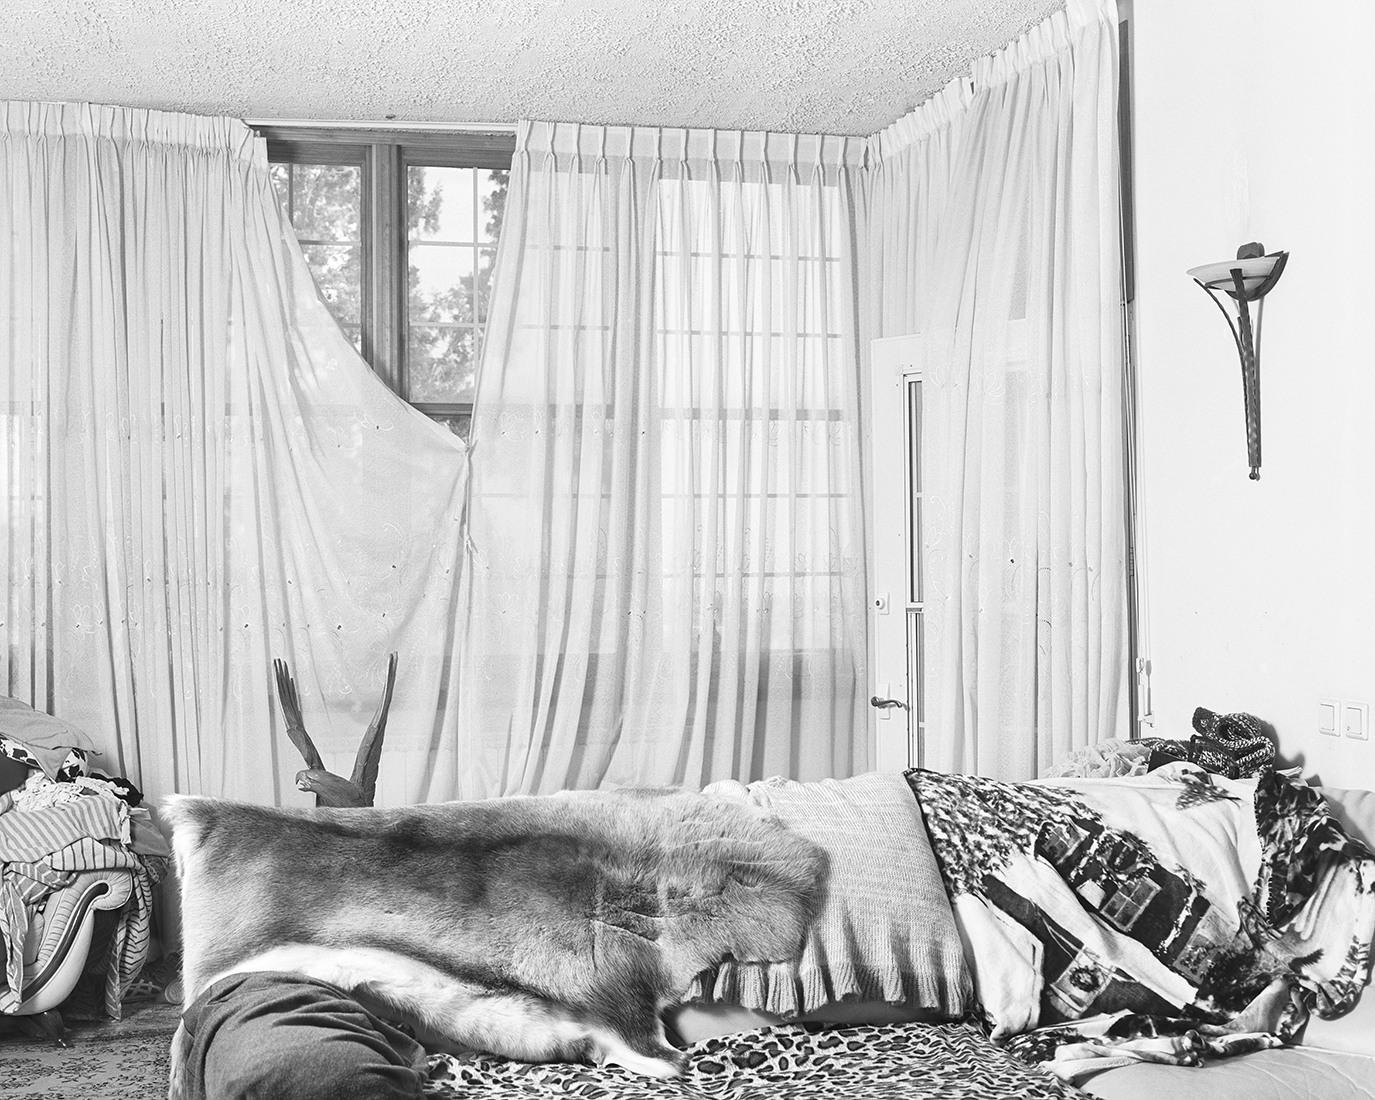 Tomer Kep, Living Room, 2016